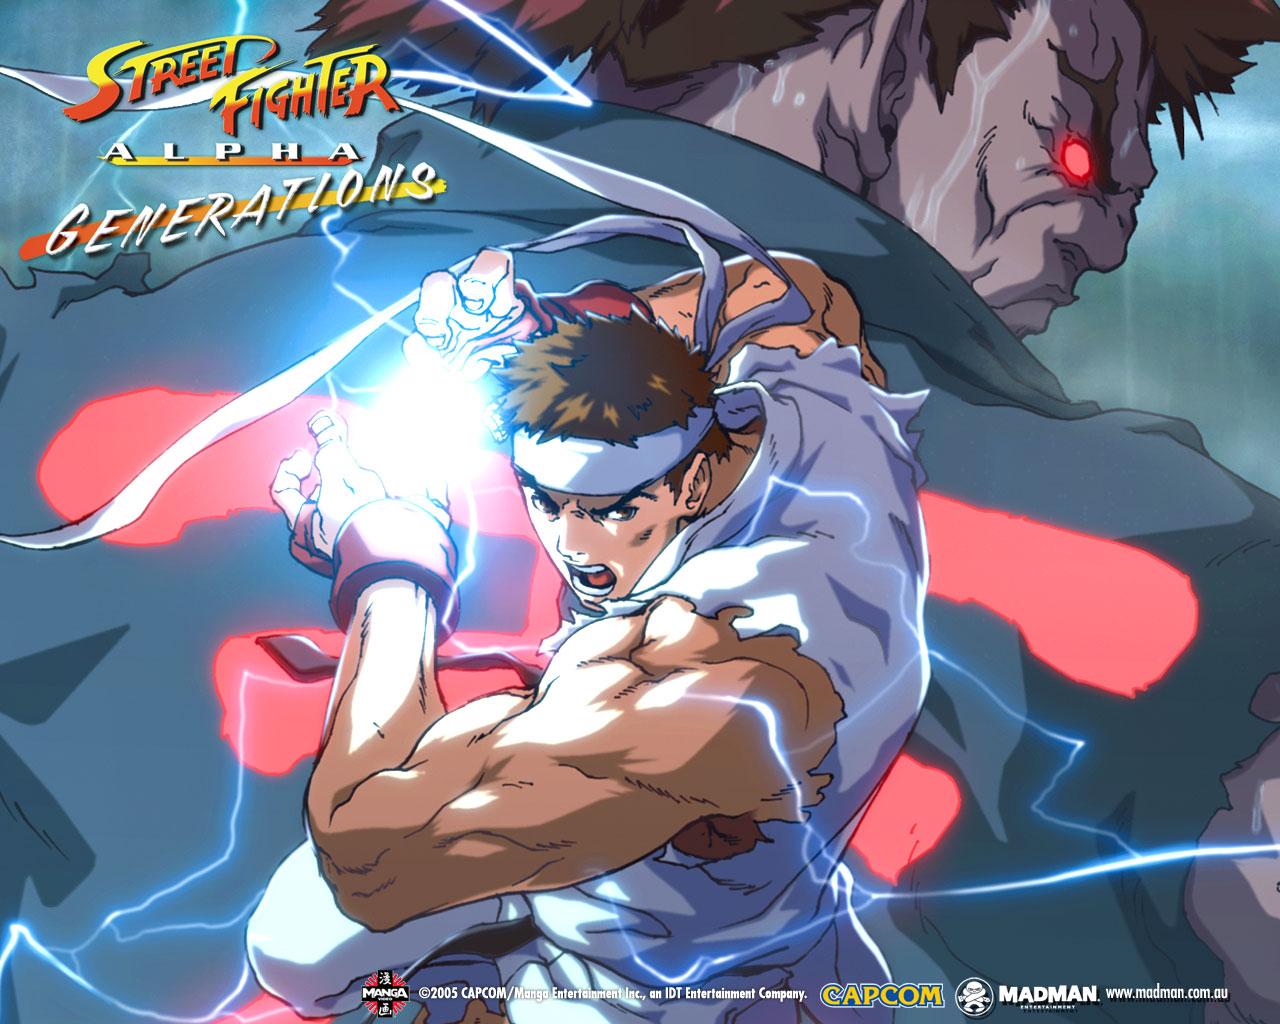 Anime Wallpaper Fighter Alpha Generations